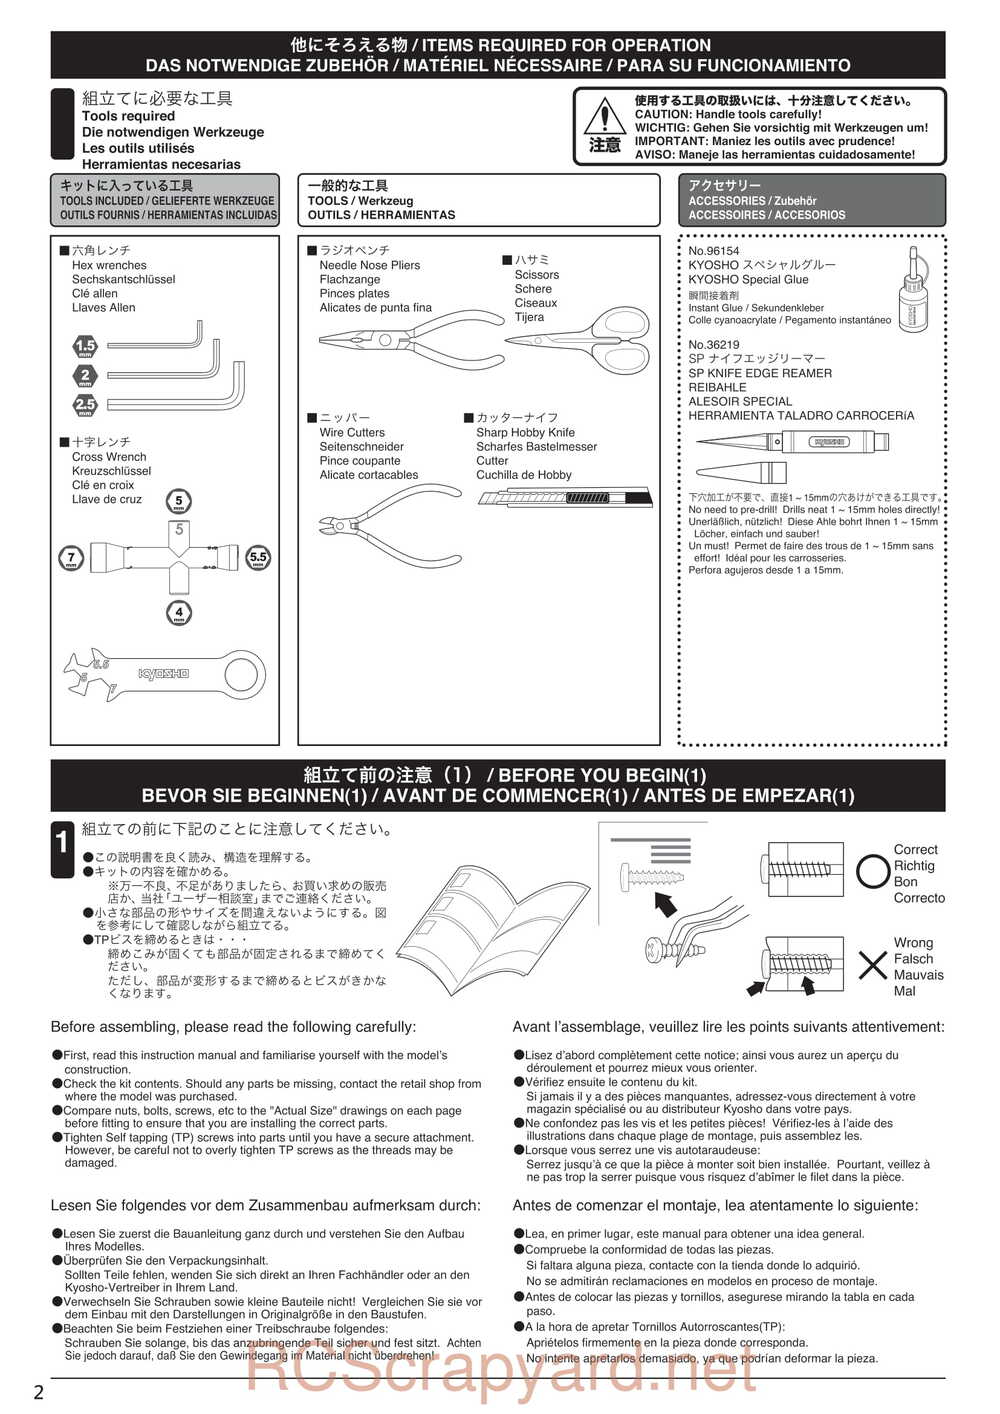 Kyosho - 30613 - Scorpion 2014 - Manual - Page 02